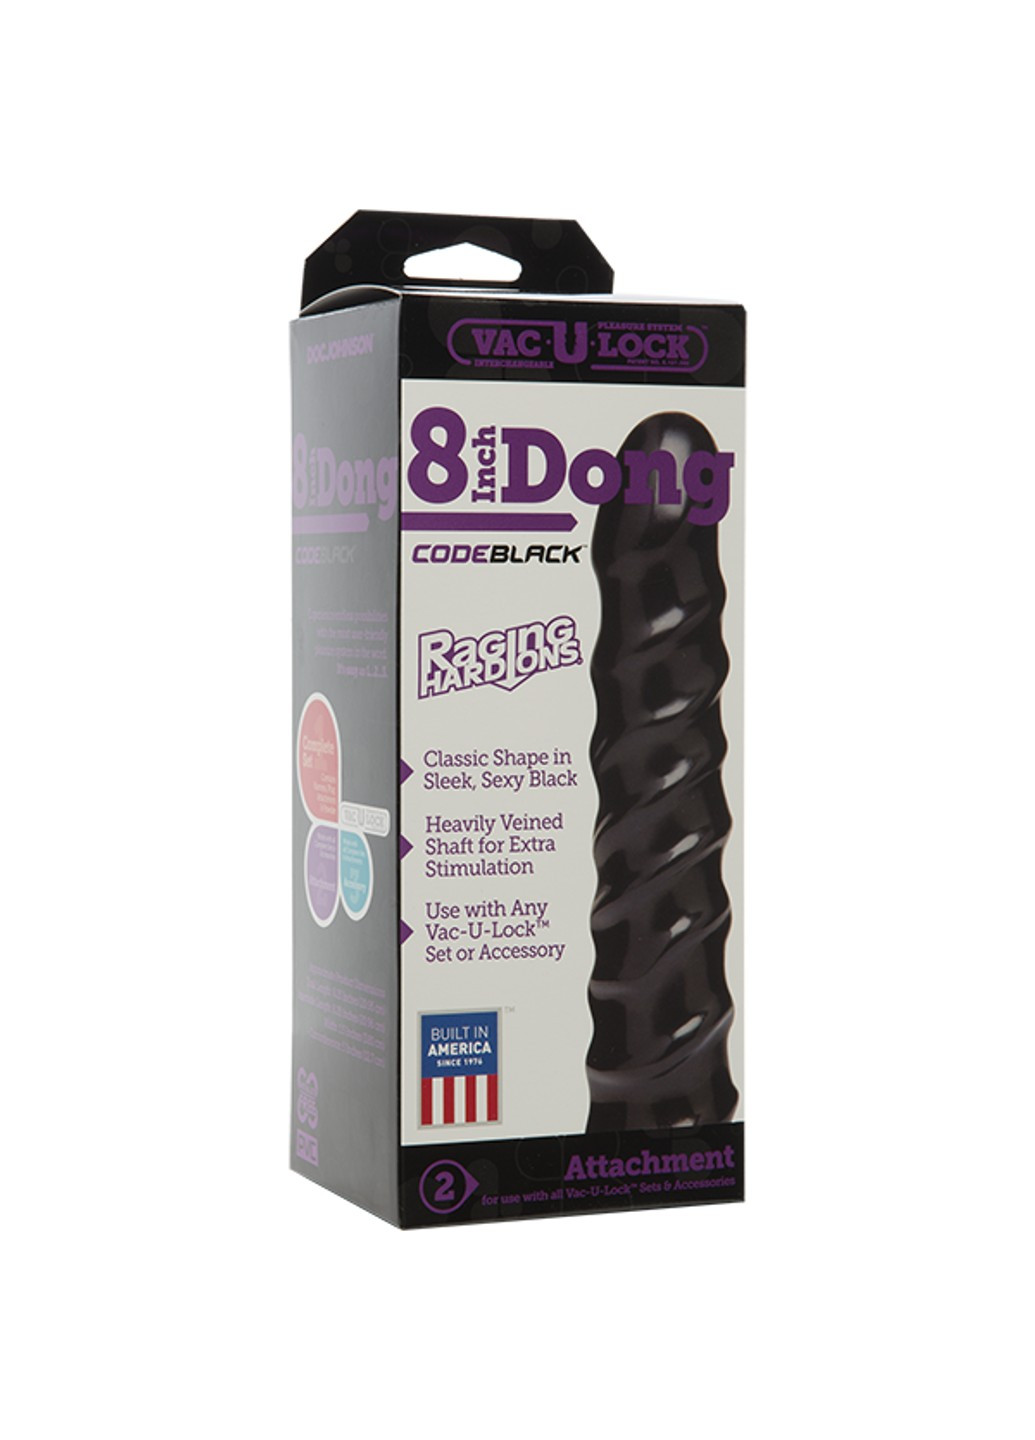 Дилдо CodeBlack - 8 Inch Raging Vac-U-Lock со стимулирующим рельефом, диаметр 3,8см Doc Johnson (254885461)